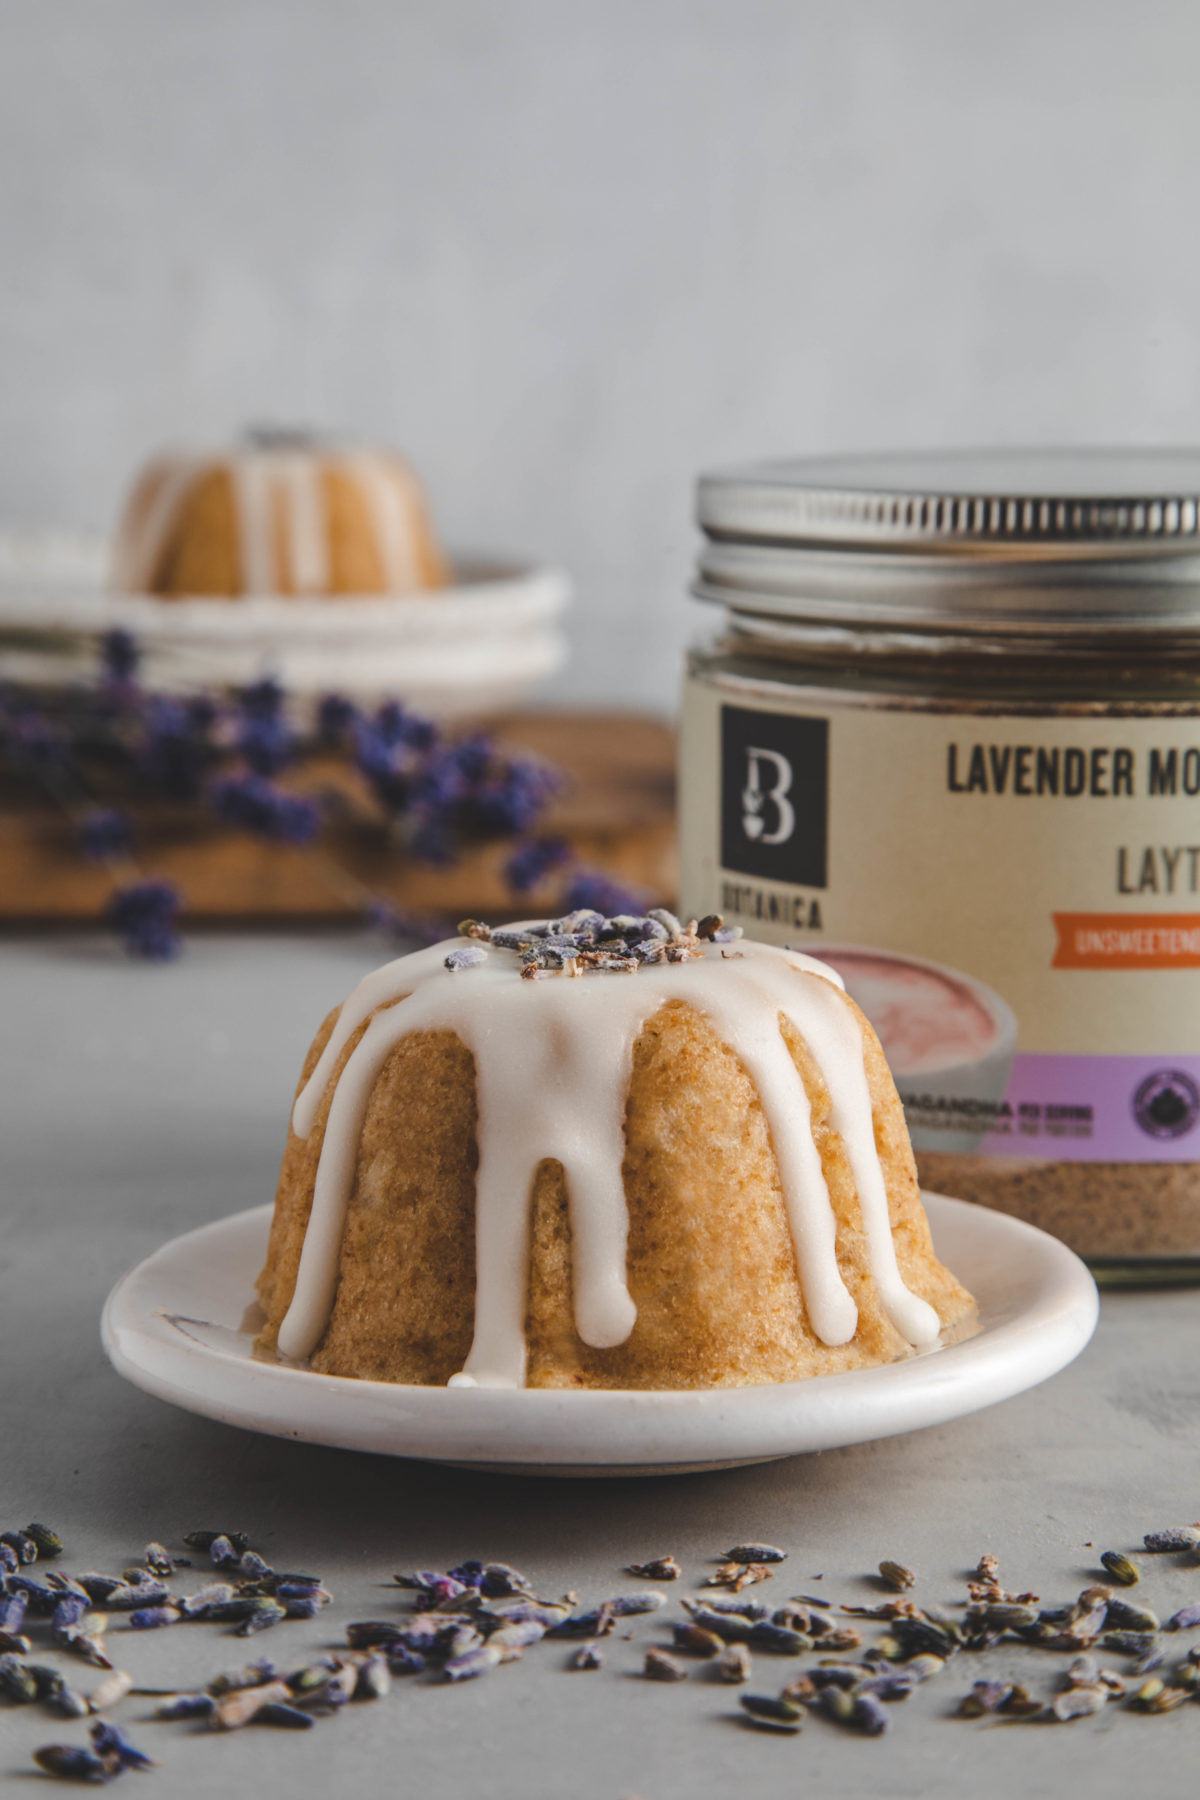 Gluten free, vegan Glazed Lavender Mini Cakes made with Botanica Health Lavender Moon Mylk powder